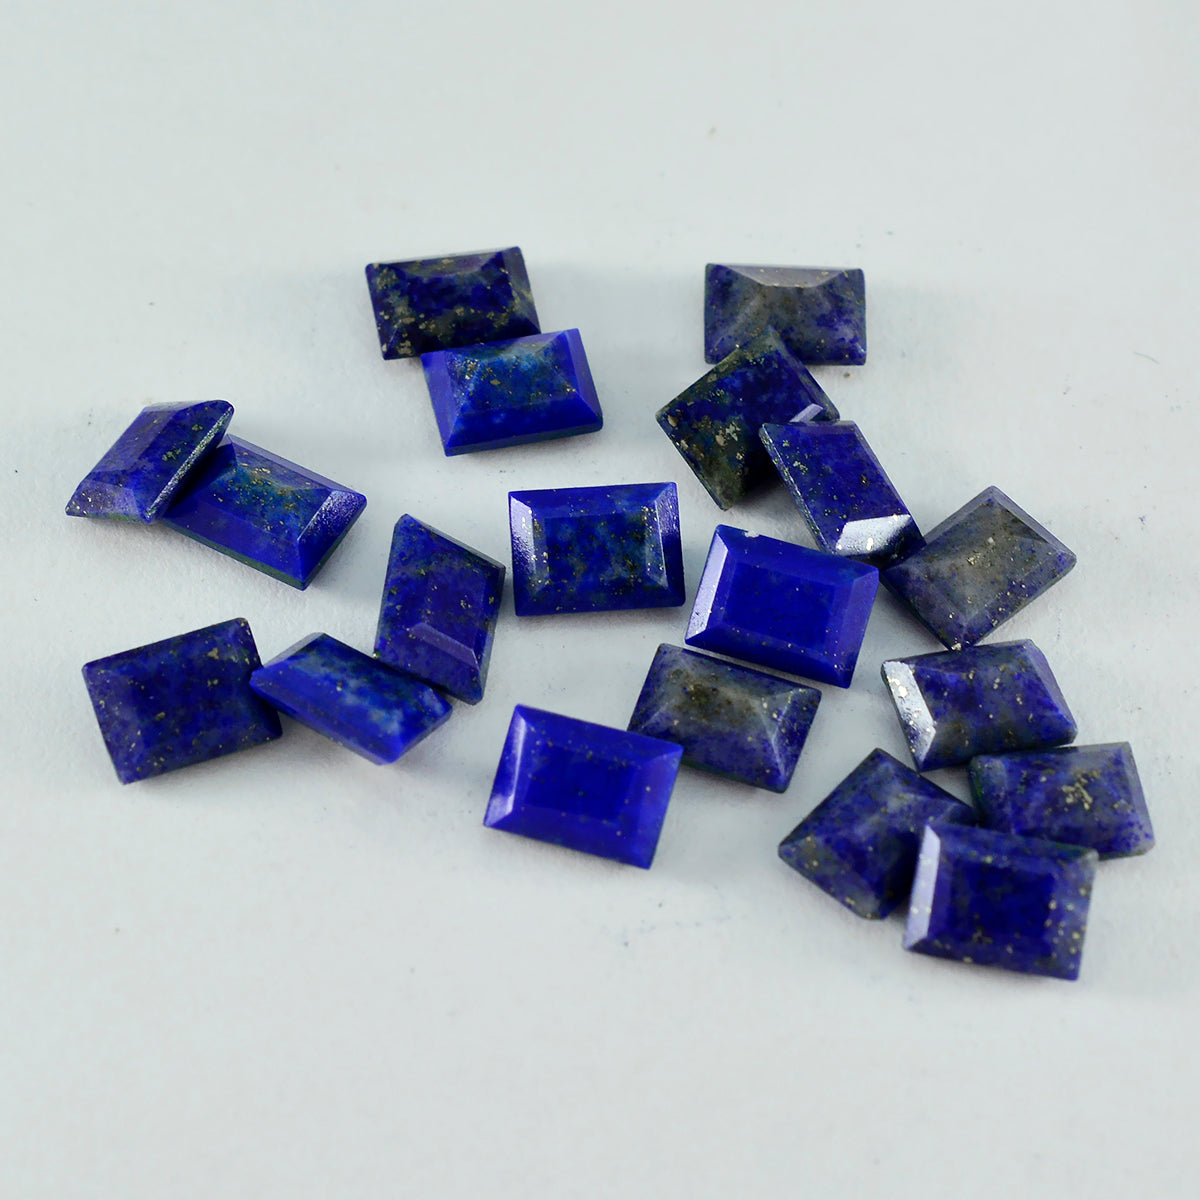 Riyogems 1PC Genuine Blue Lapis Lazuli Faceted 5x7 mm Octagon Shape attractive Quality Stone